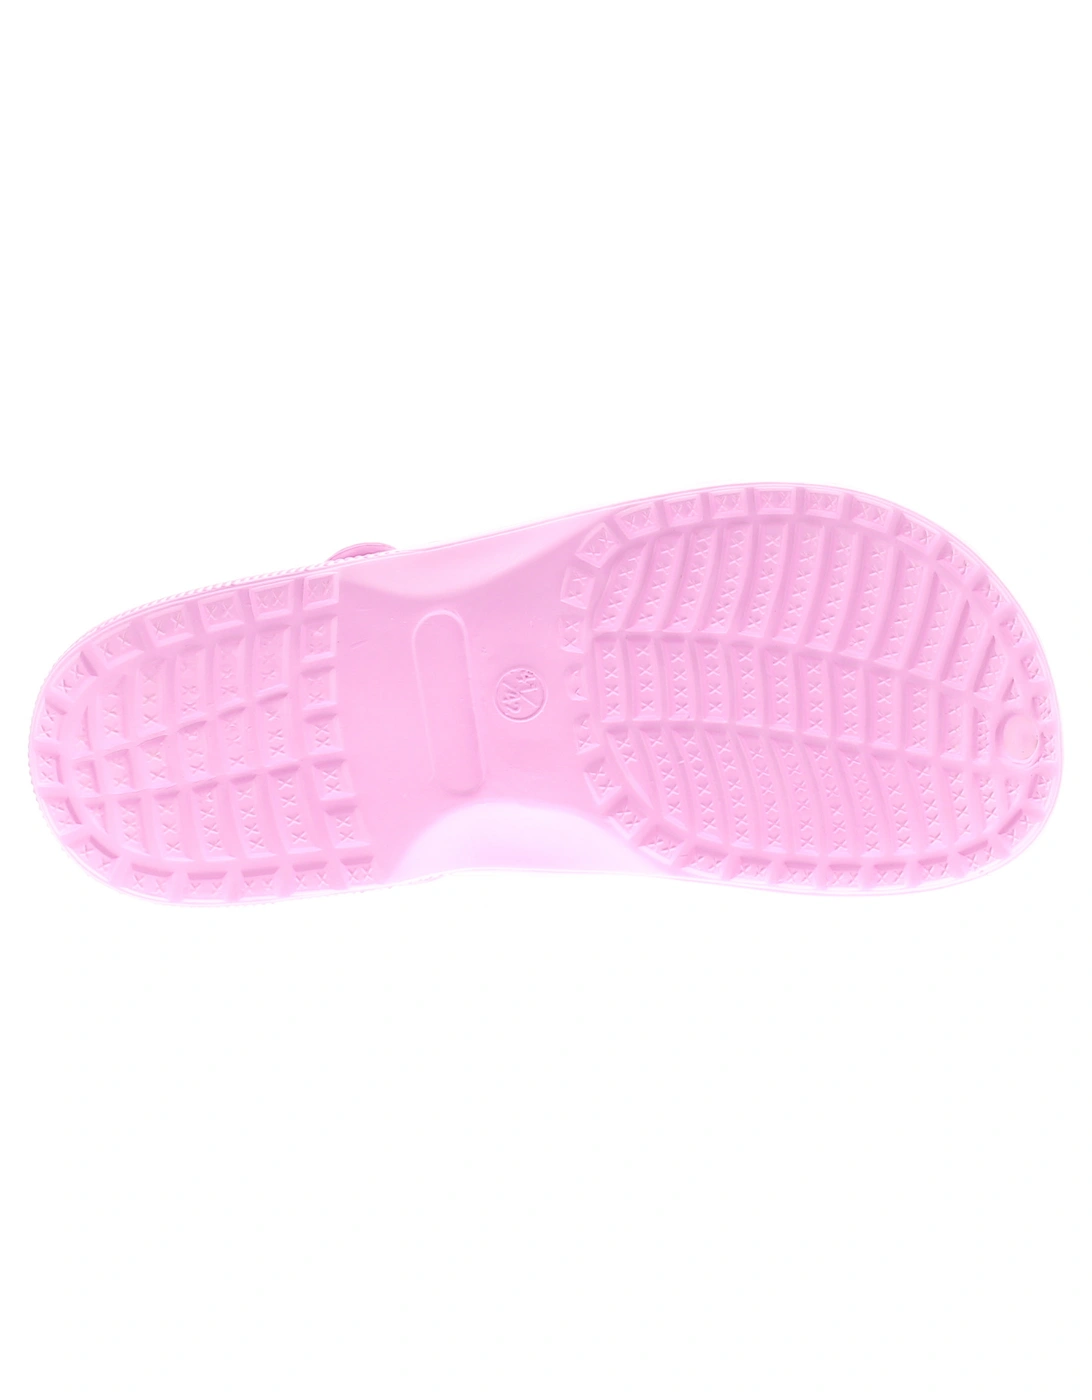 Womens Flat Sandals Clogs Pop Slip On  fuchsia UK Size